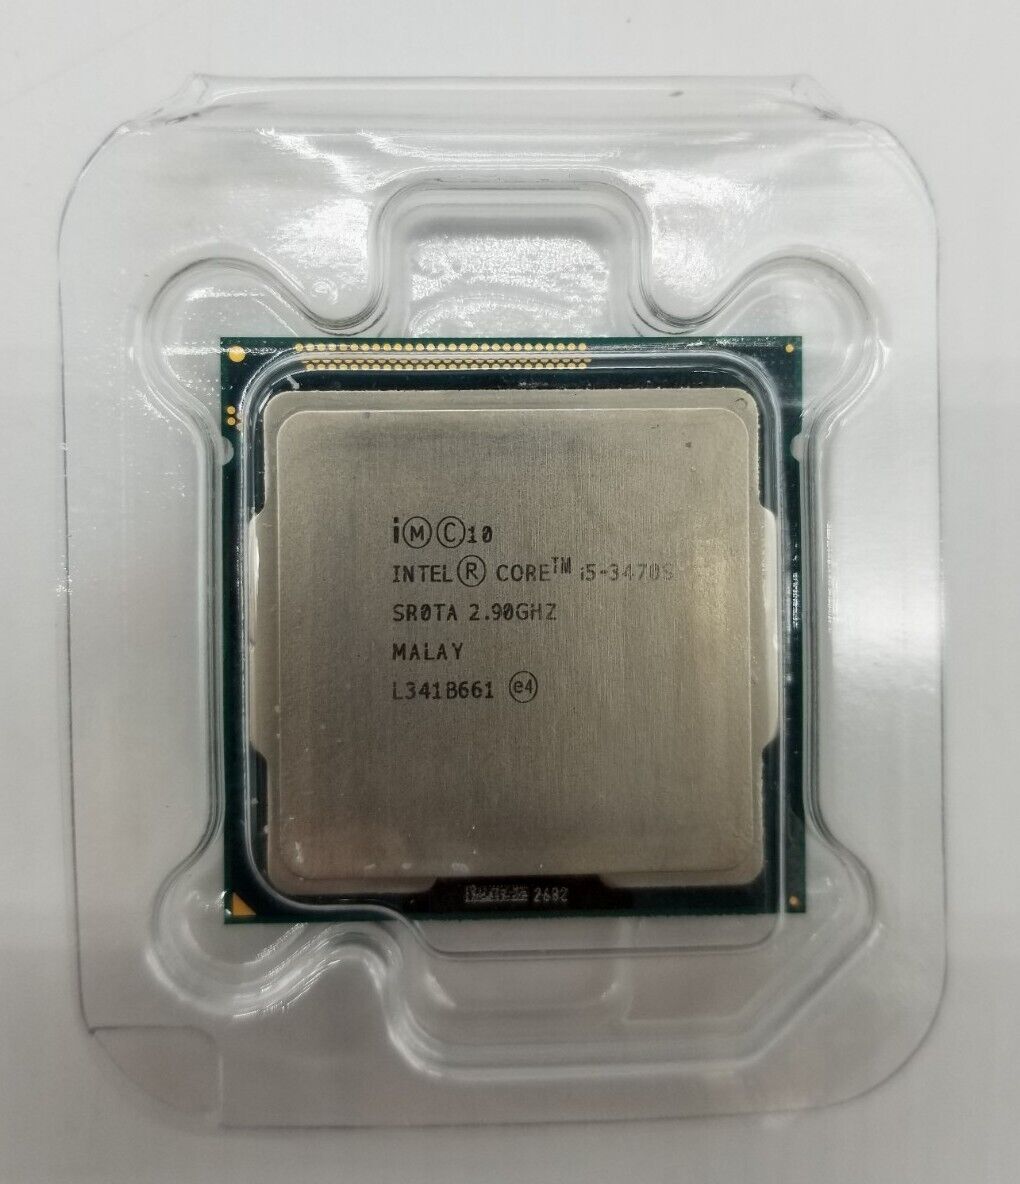 Intel Core i5-3470S SR0TA 2.90 GHz CPU Processor